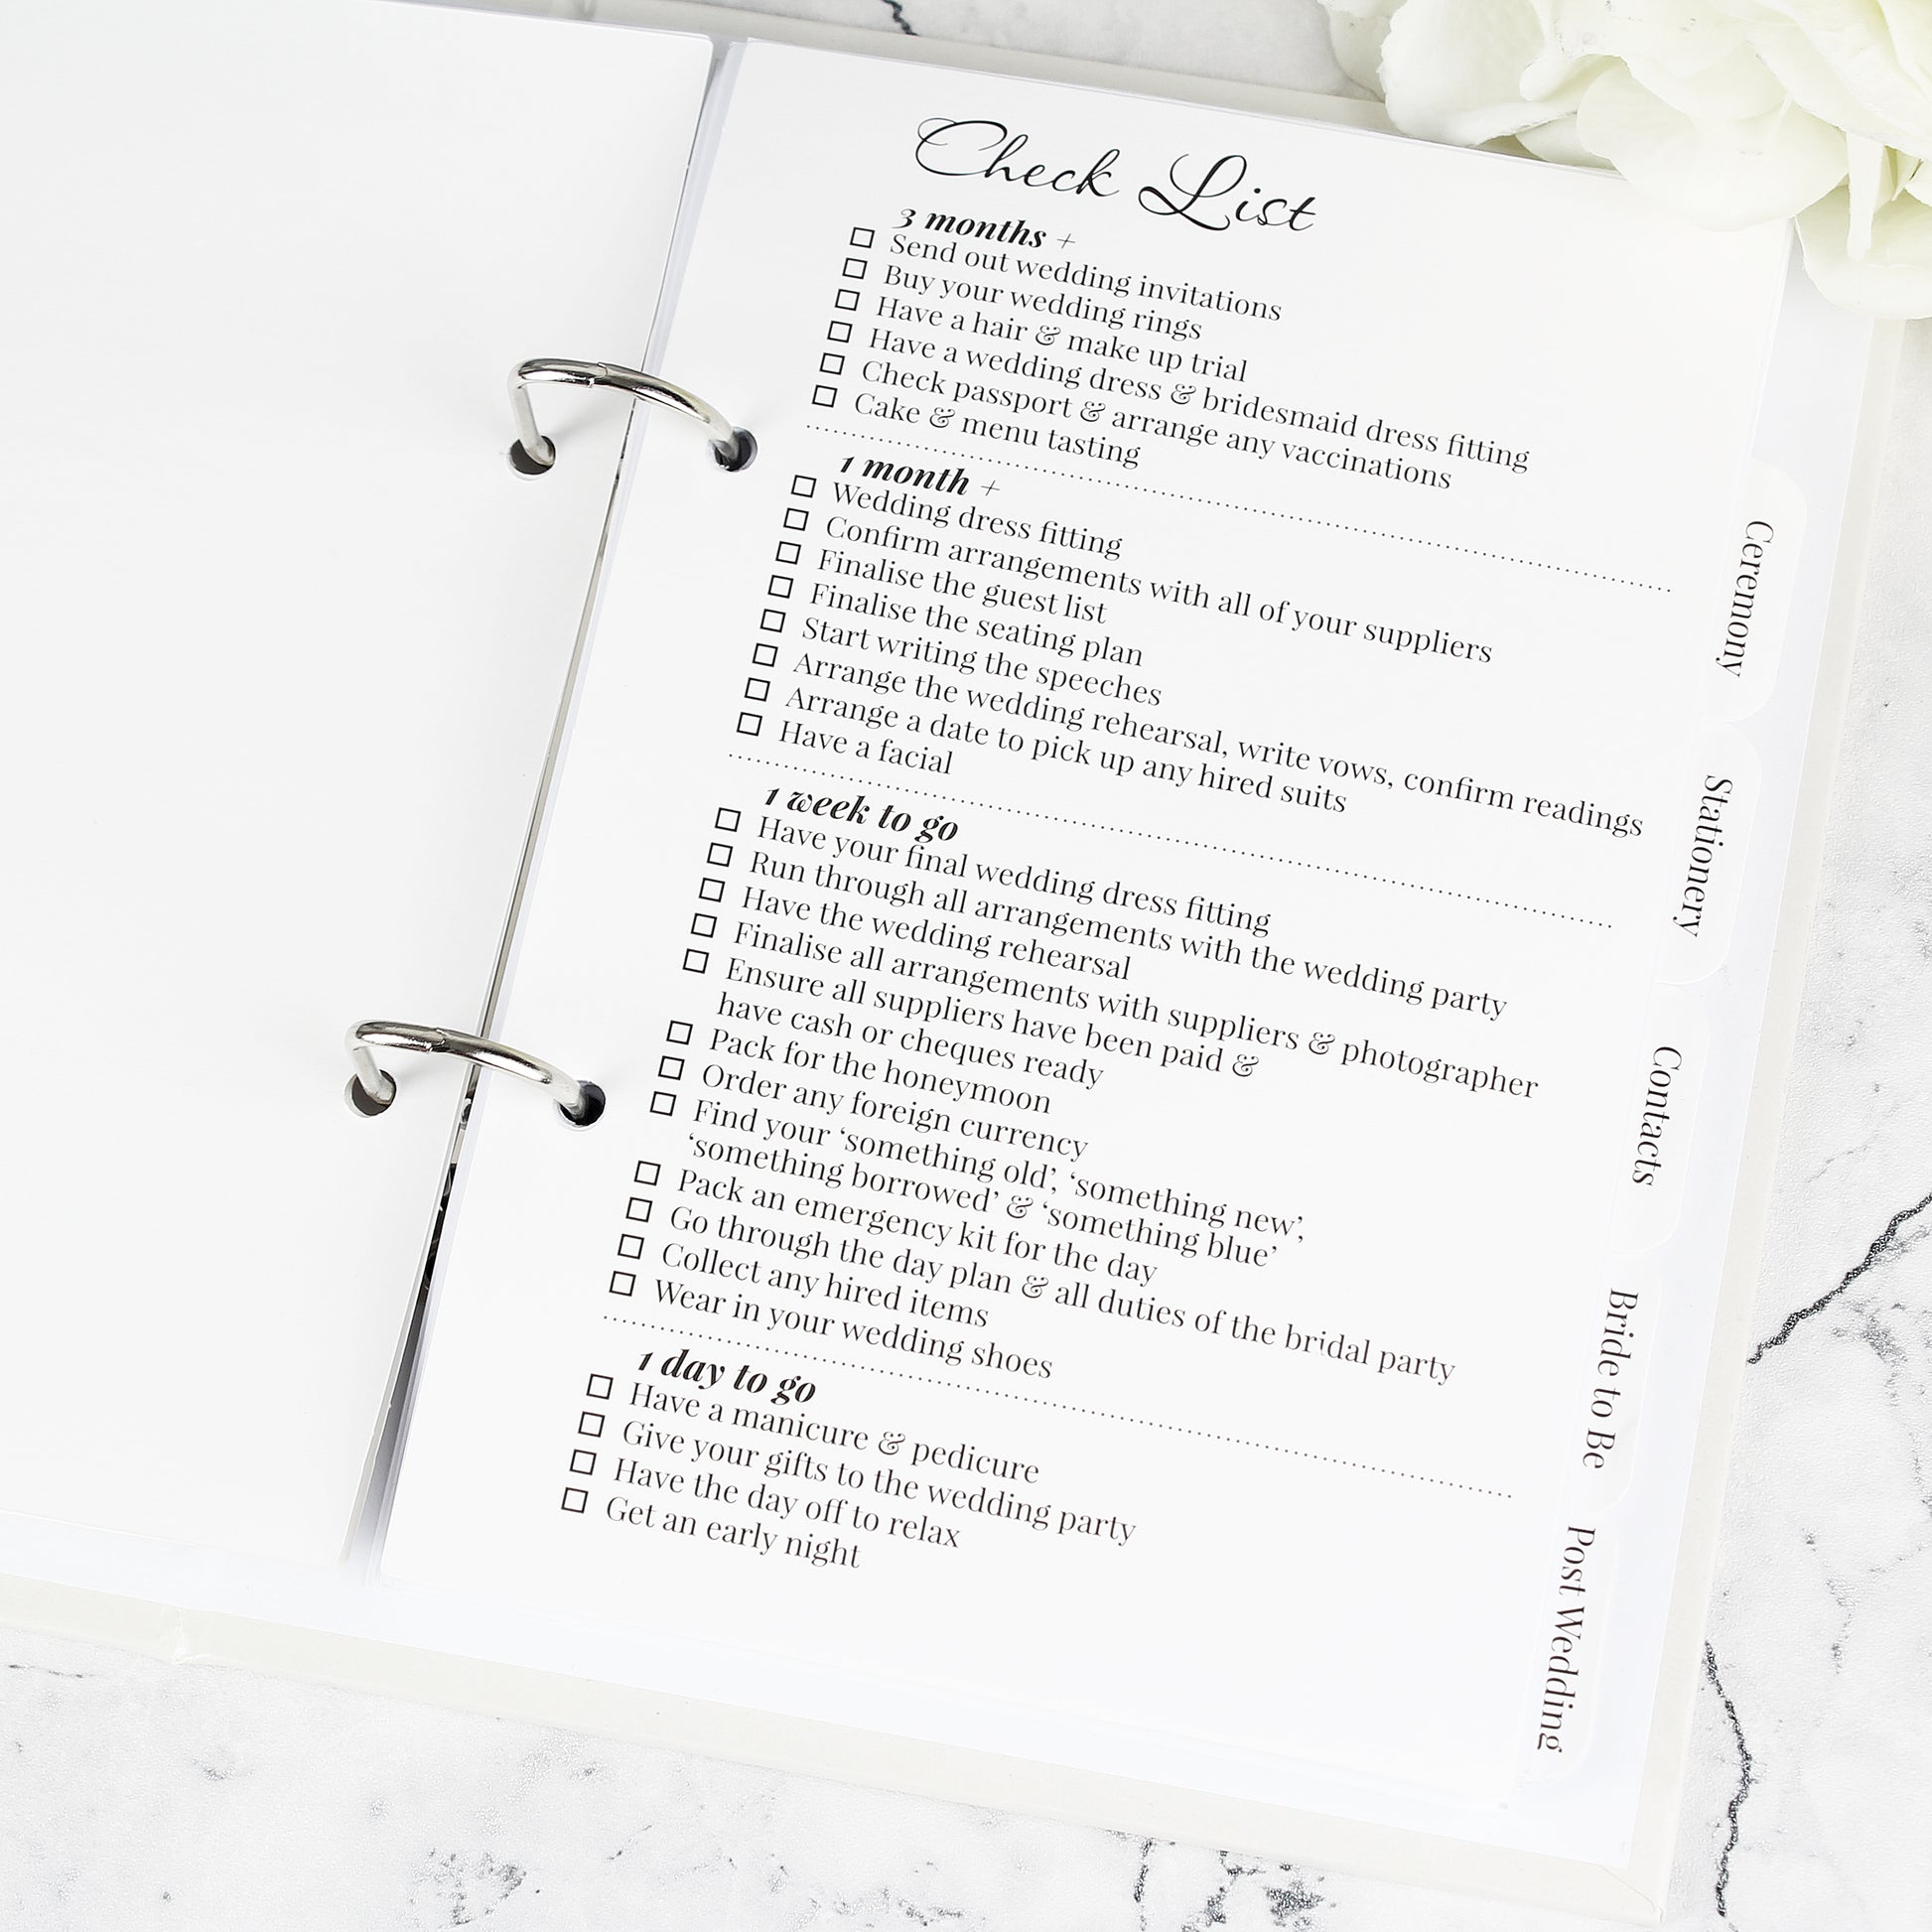 Leaf design wedding planner, personalised with the couples' names, secret garden theme, botanical wedding, timeline